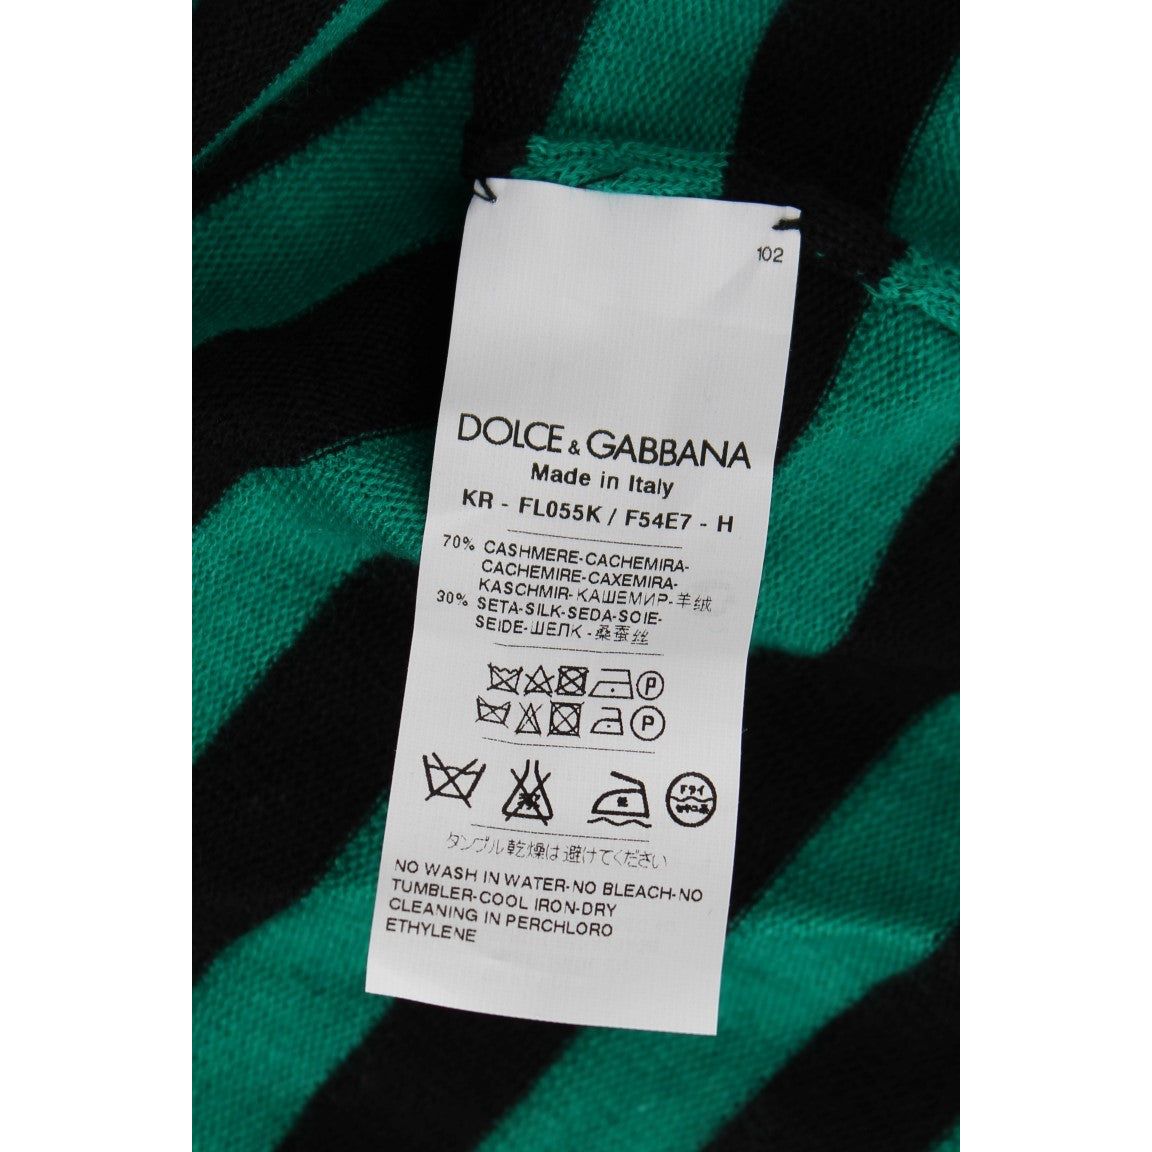 Dolce & Gabbana Elegant Striped Cashmere Silk Sweater green-black-silk-cashmere-sweater 178844-green-black-silk-cashmere-sweater-6.jpg